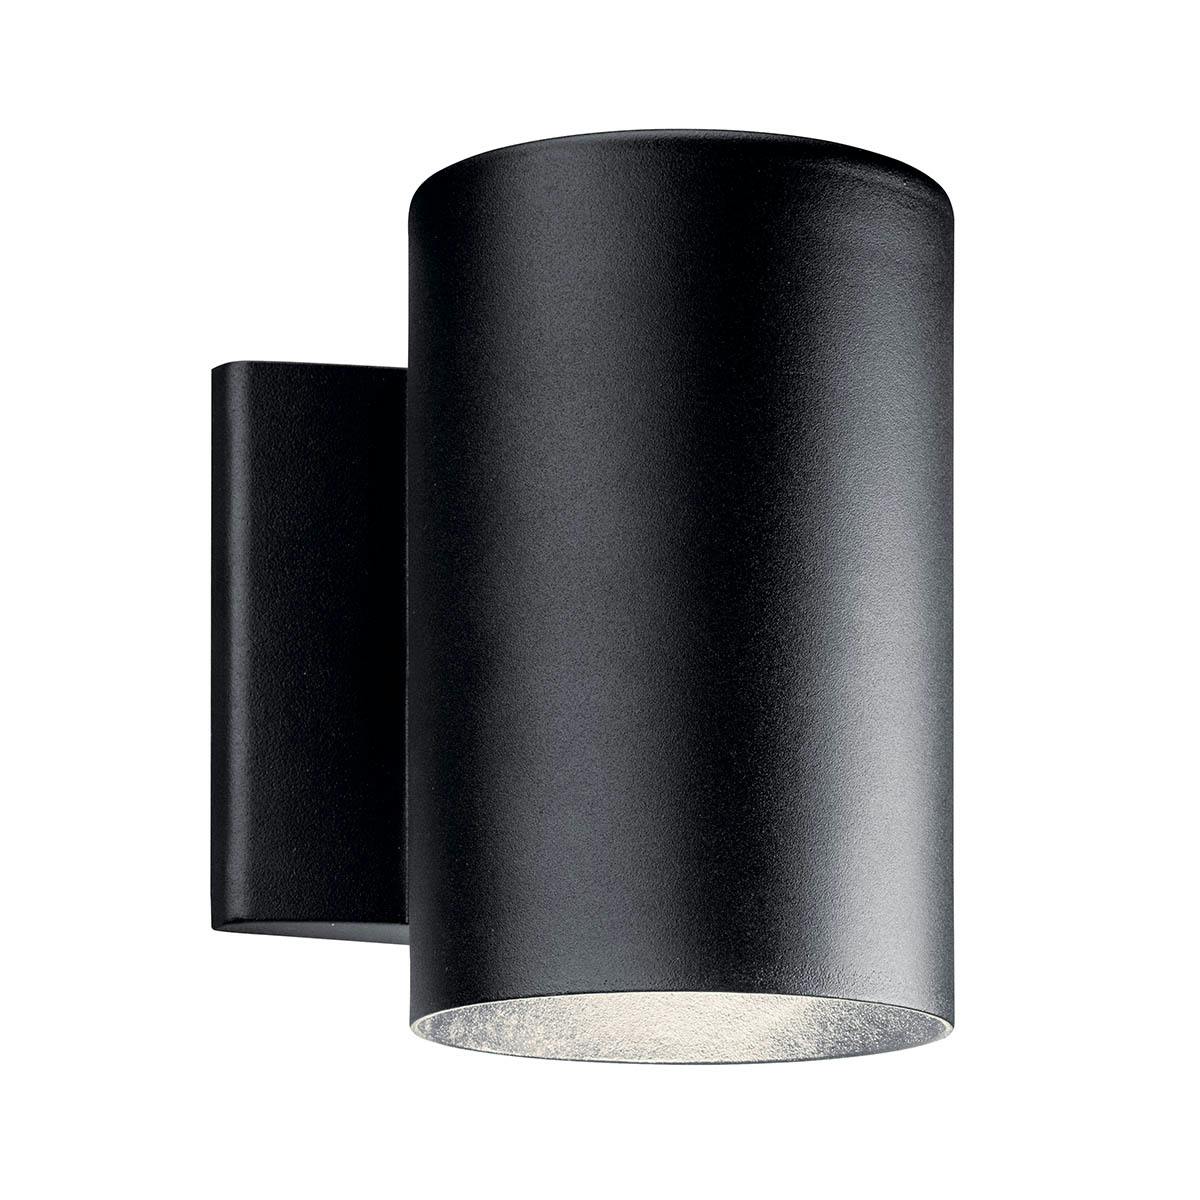 Cylinder 3000K LED 7” Wall Light on a white background